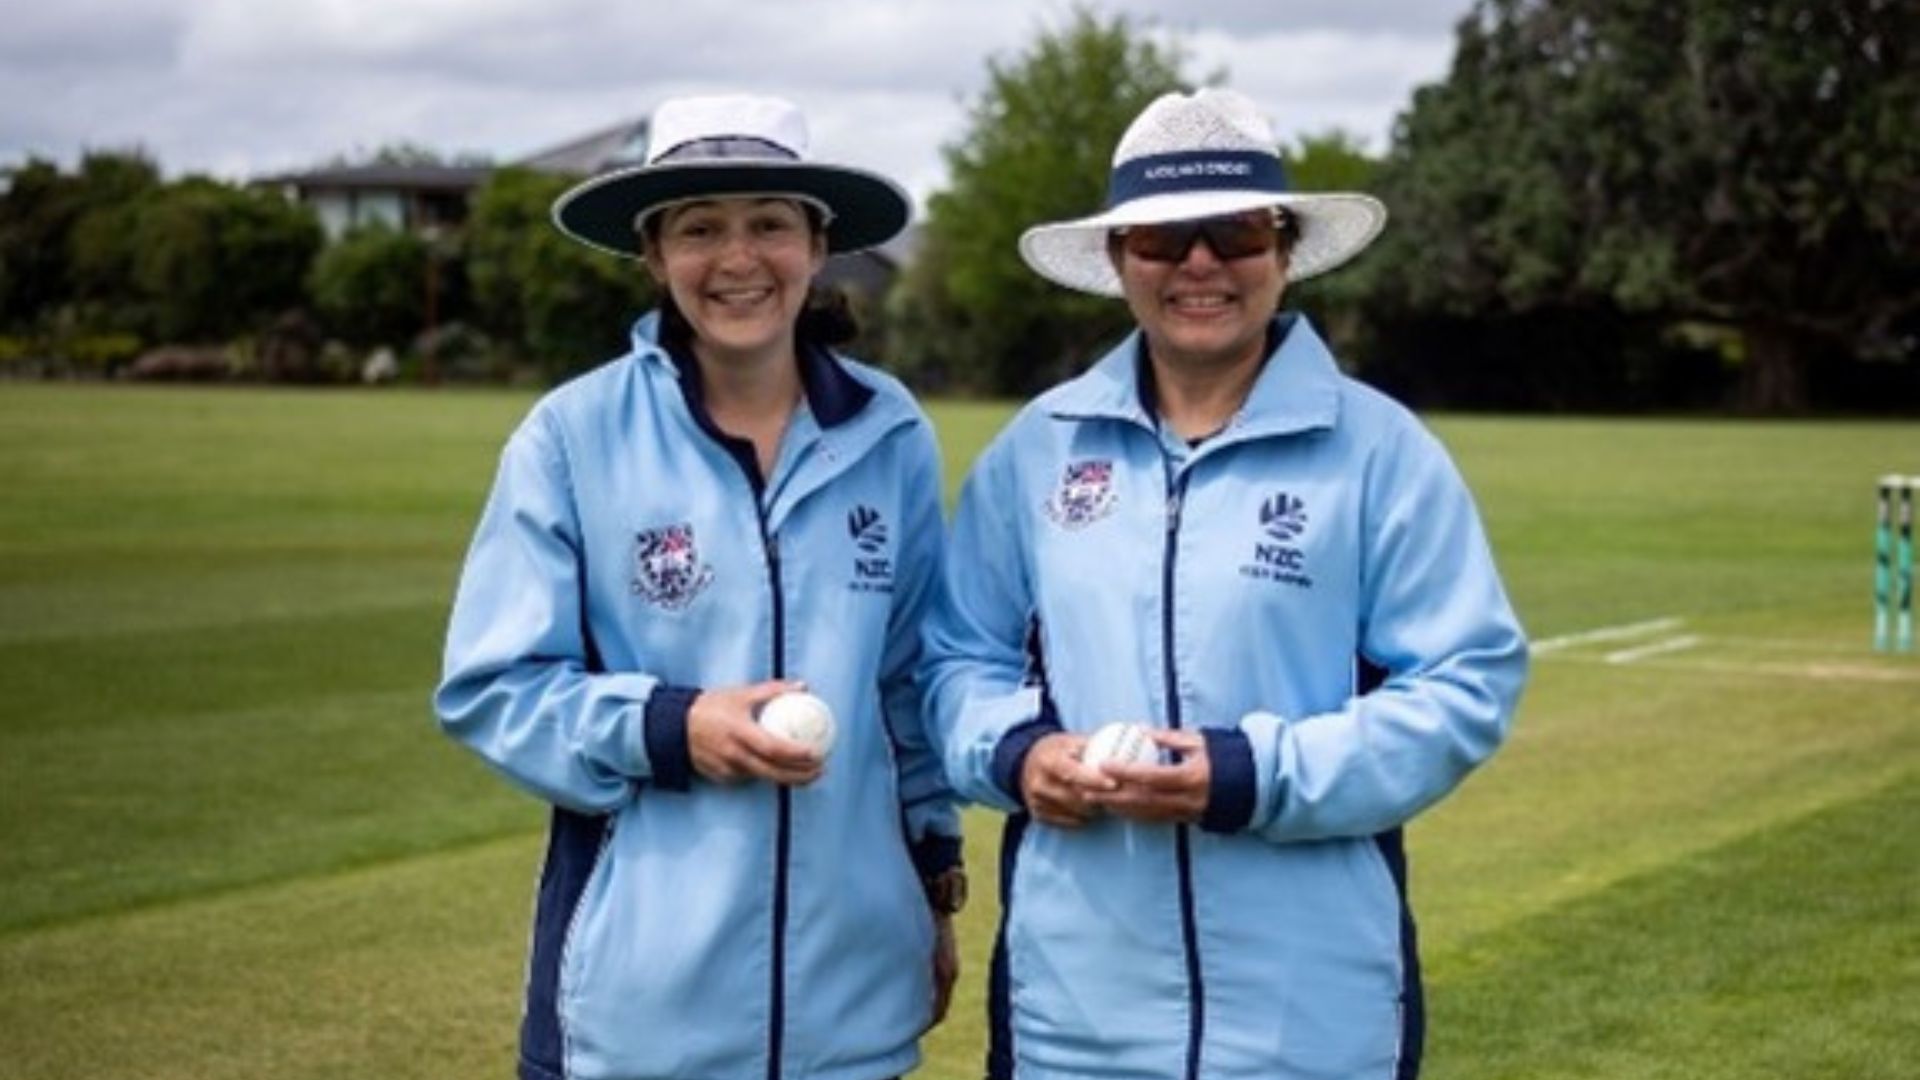 Two women holding cricket balls